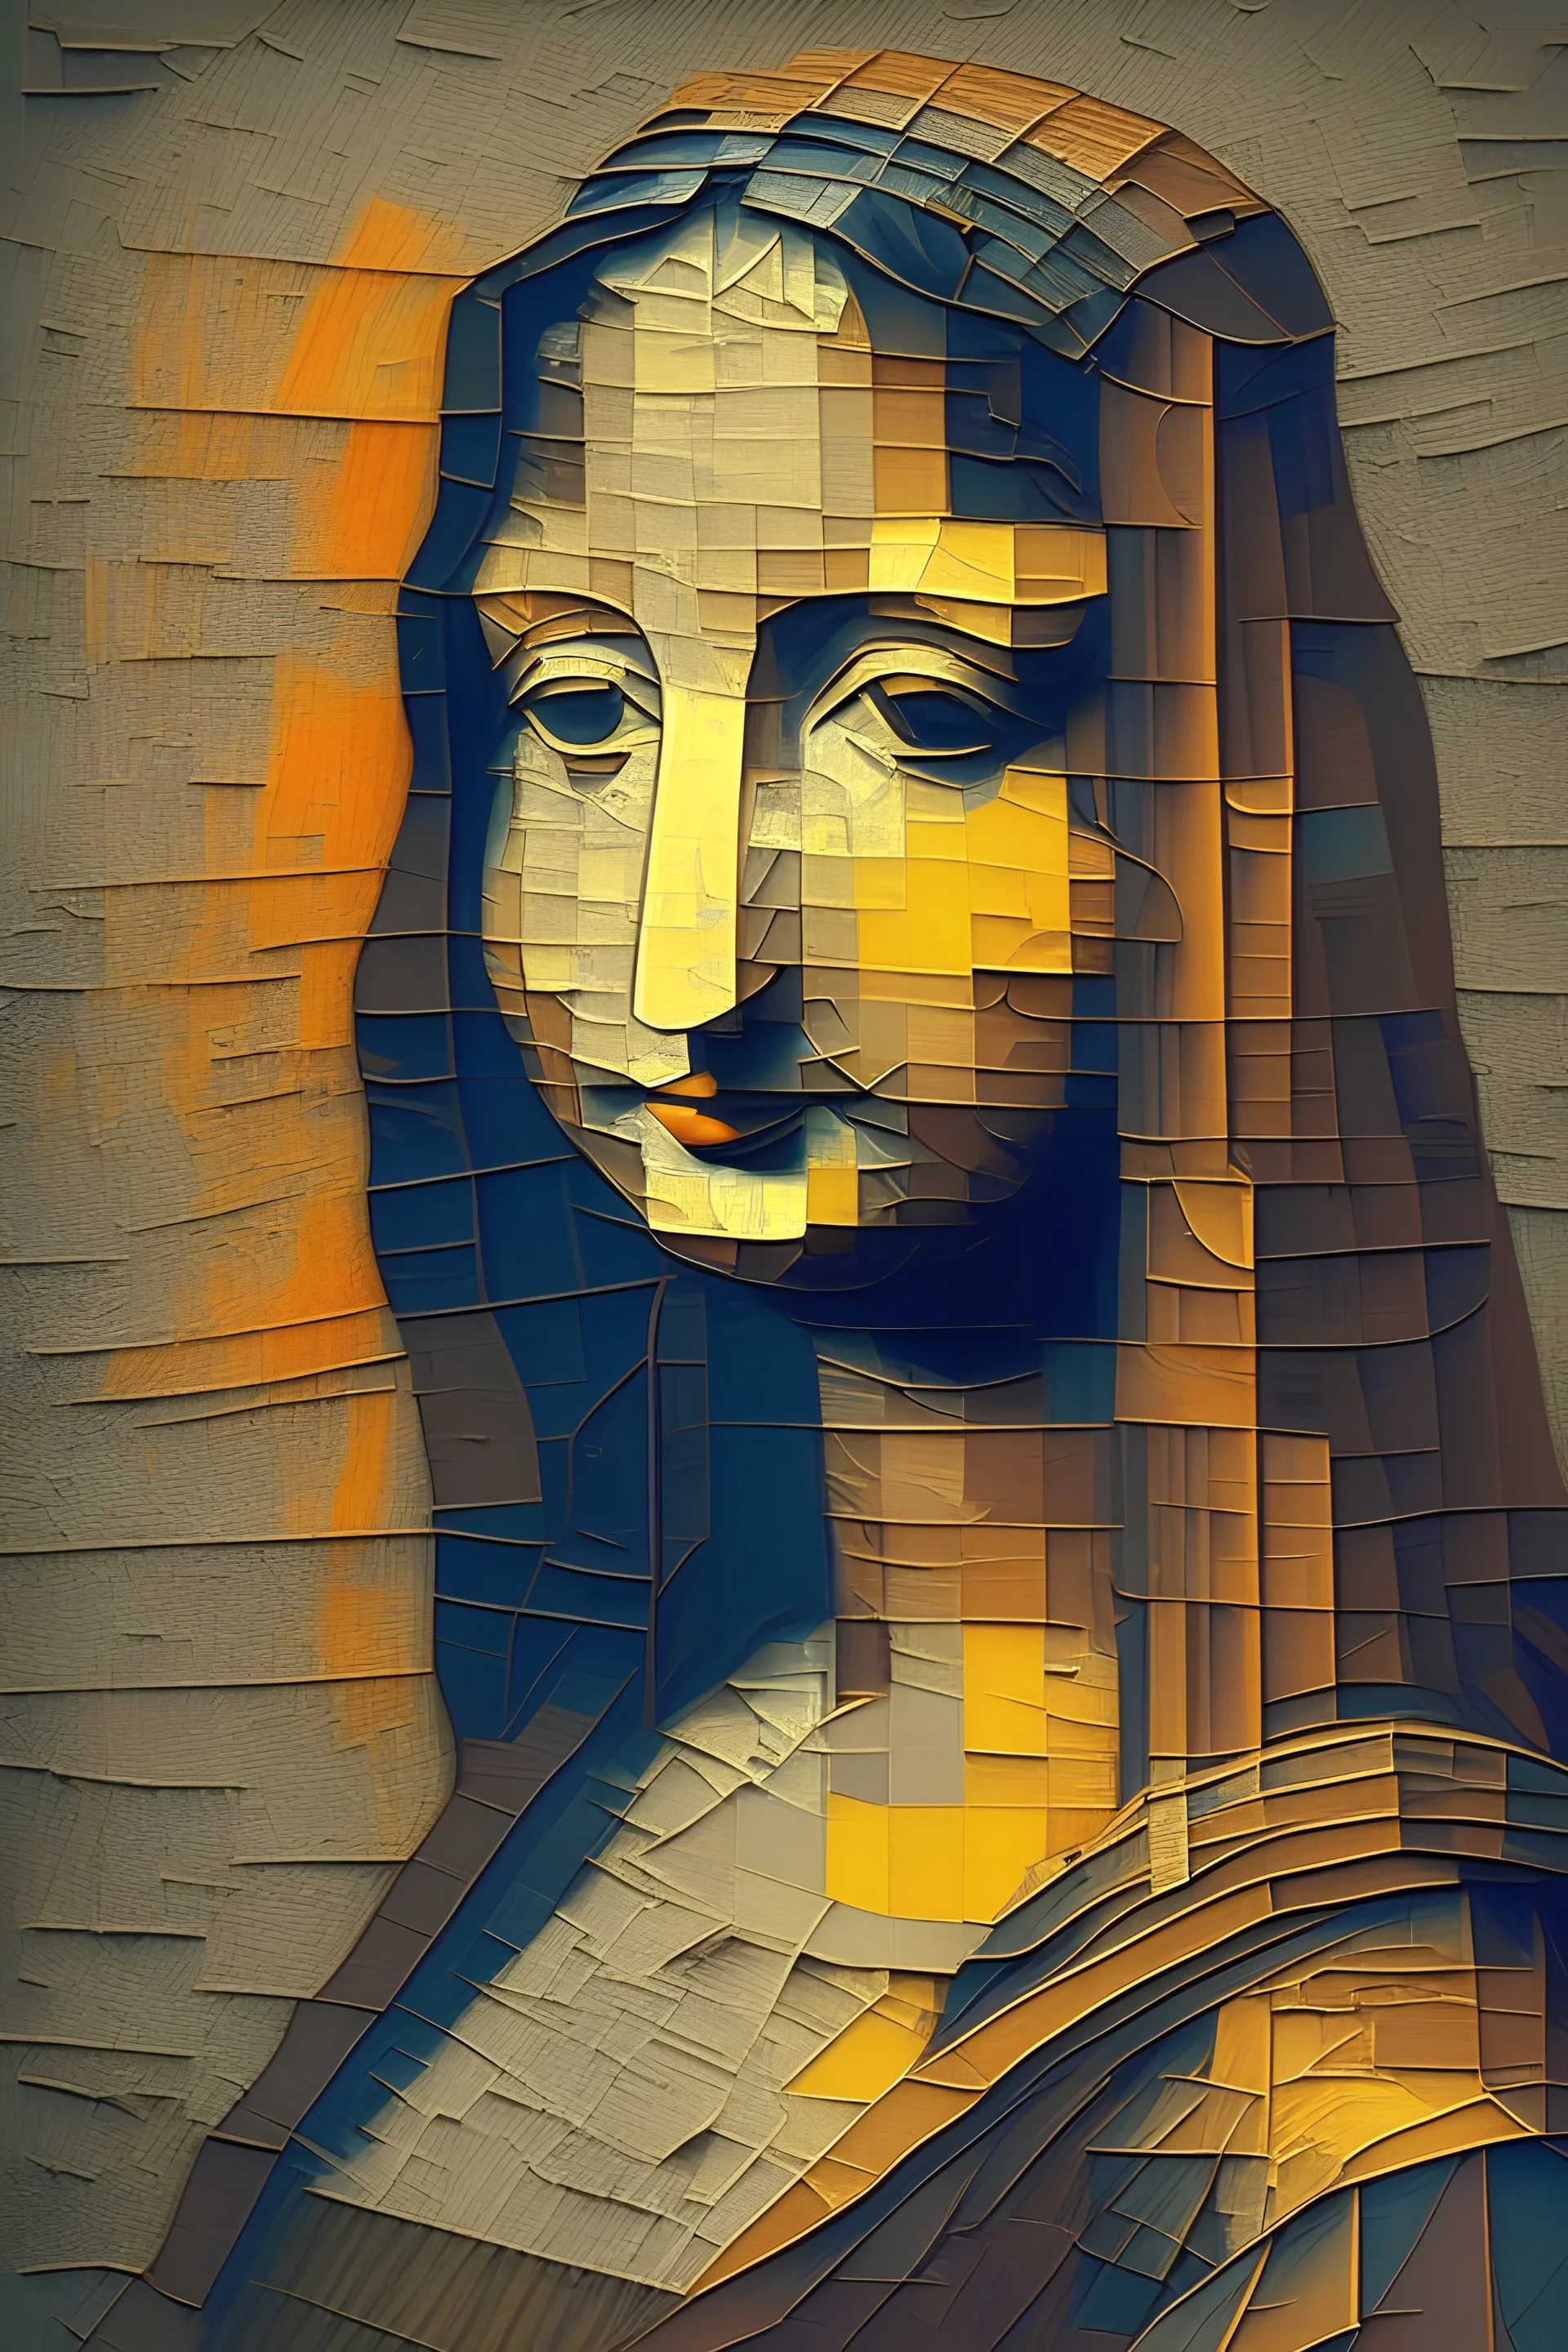 Mona Lisa , abstract style